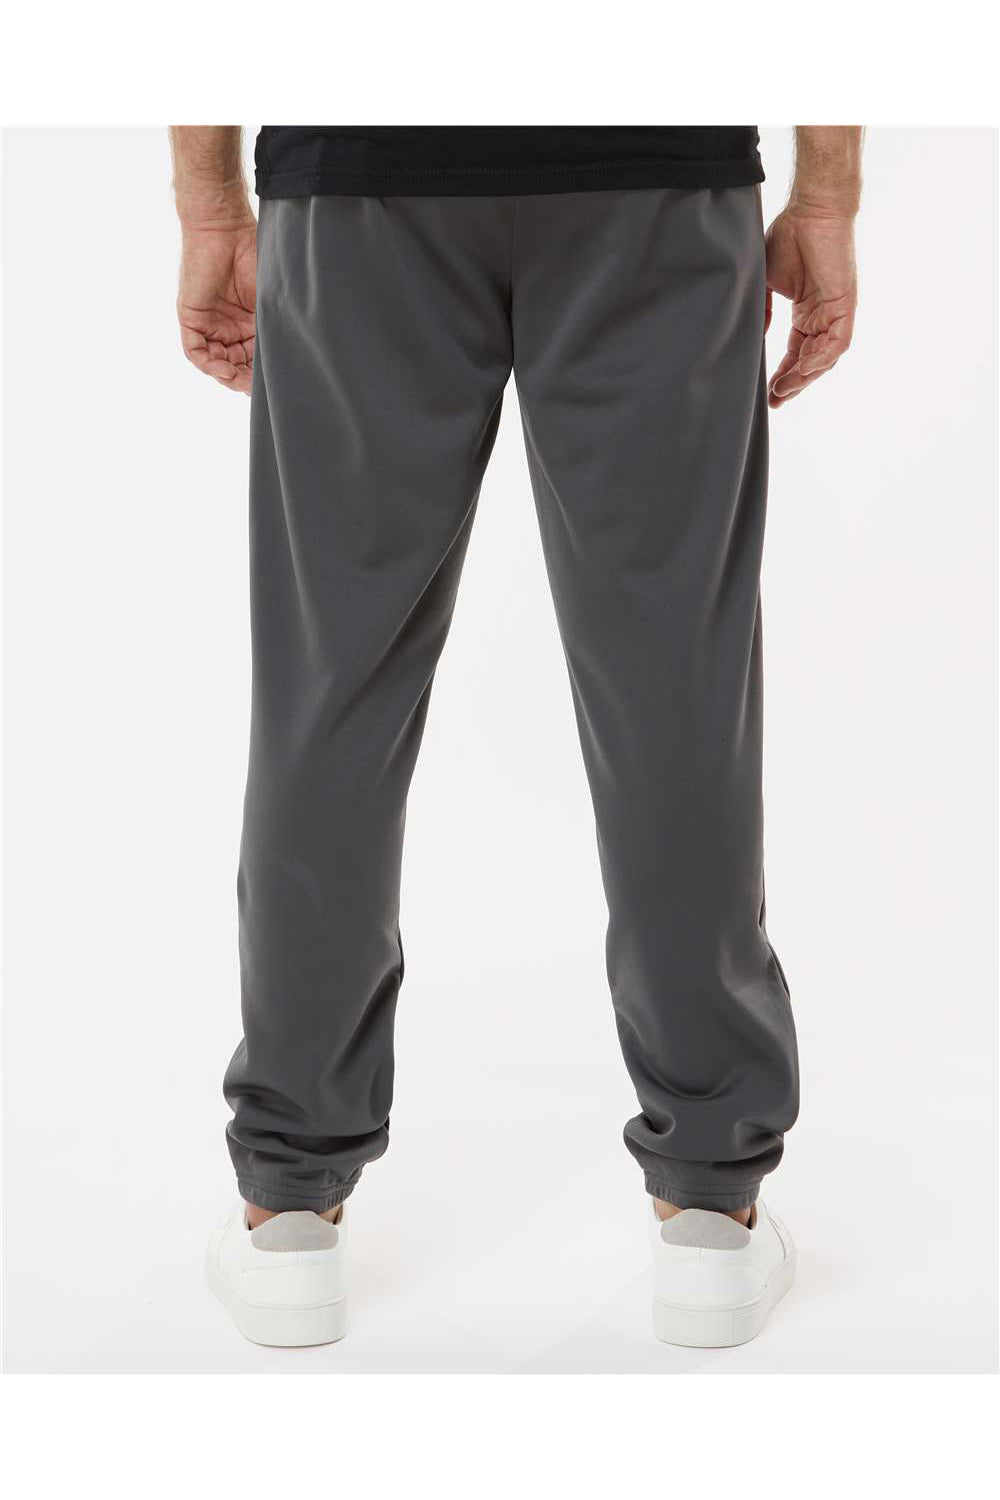 Oakley FOA402996 Mens Team Issue Enduro Hydrolix Sweatpants w/ Pockets Forged Iron Grey Model Back